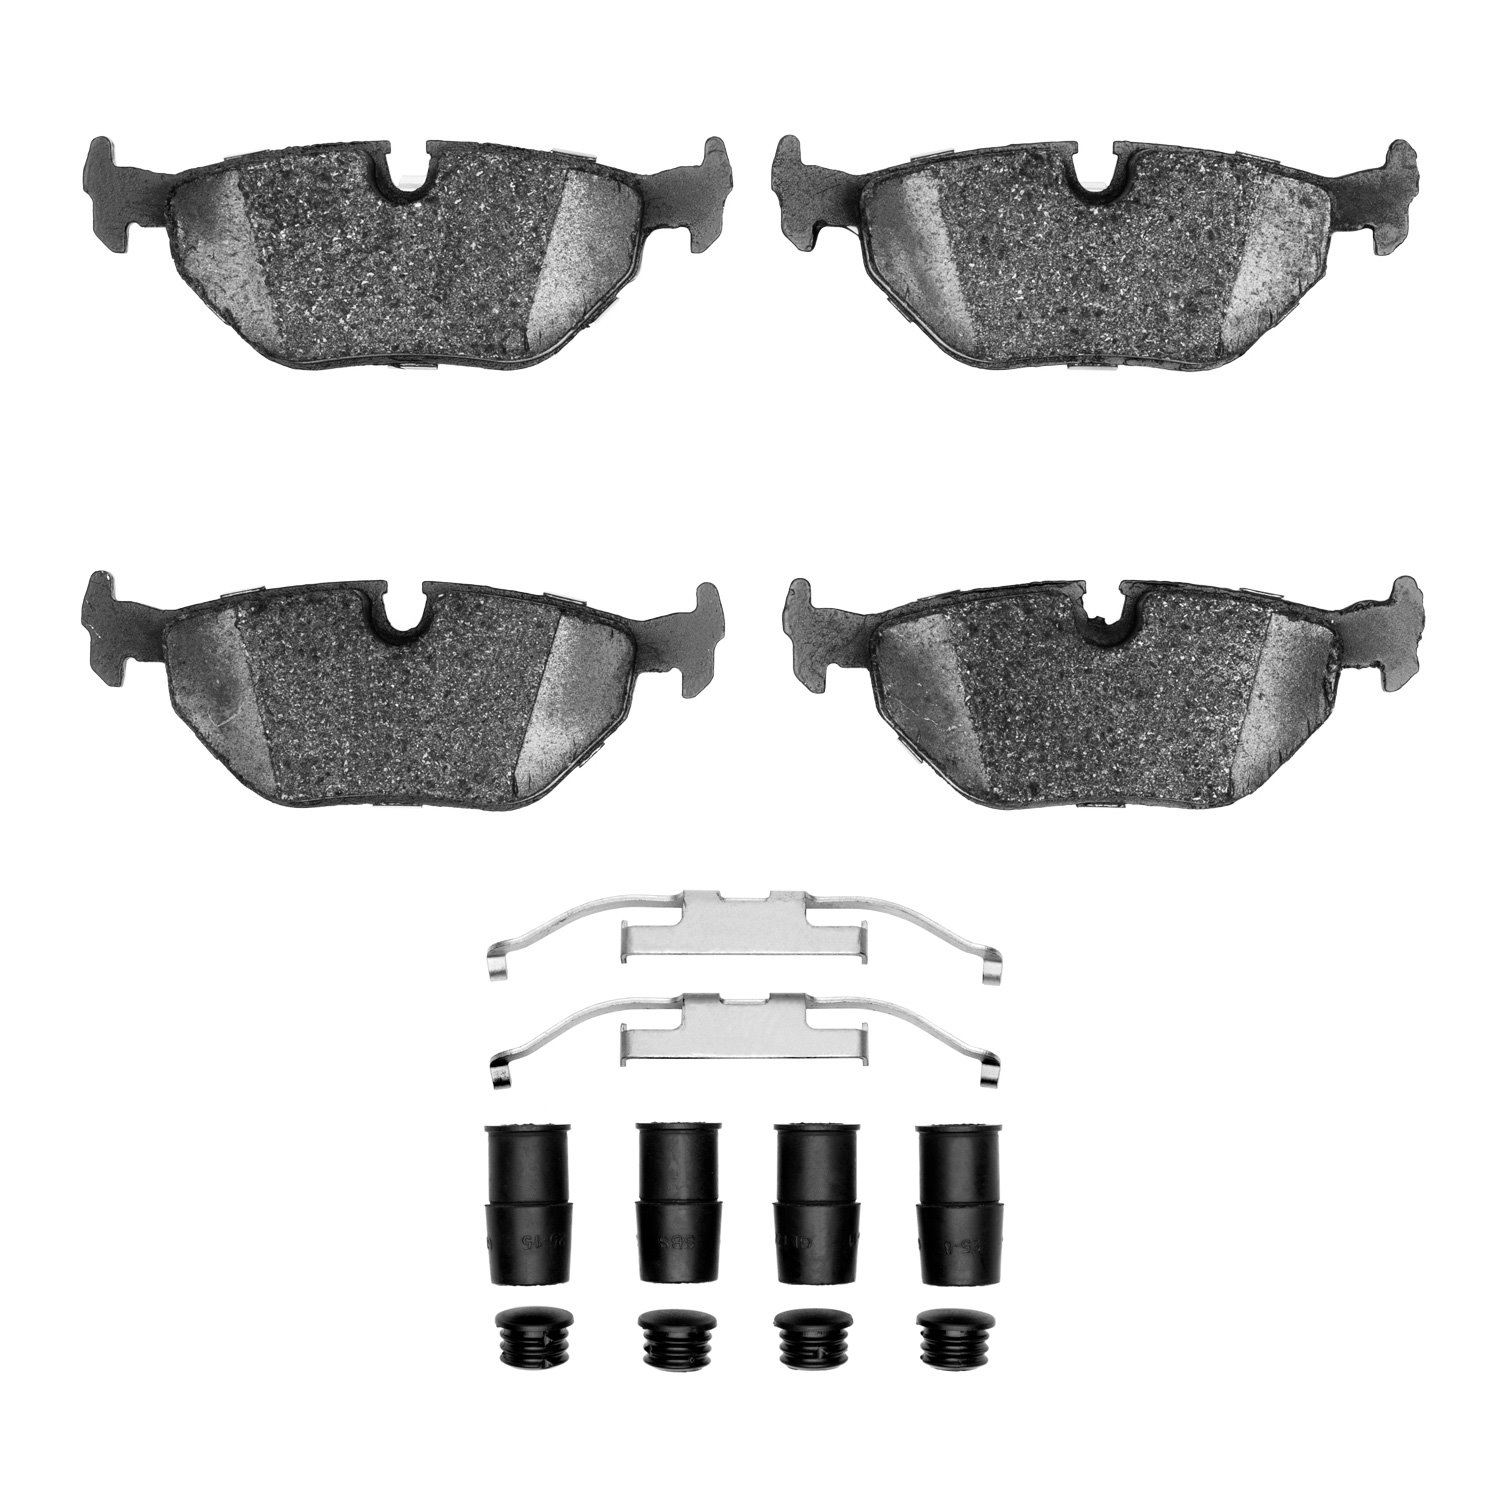 1551-0396-01 5000 Advanced Low-Metallic Brake Pads & Hardware Kit, 1987-2002 BMW, Position: Rear